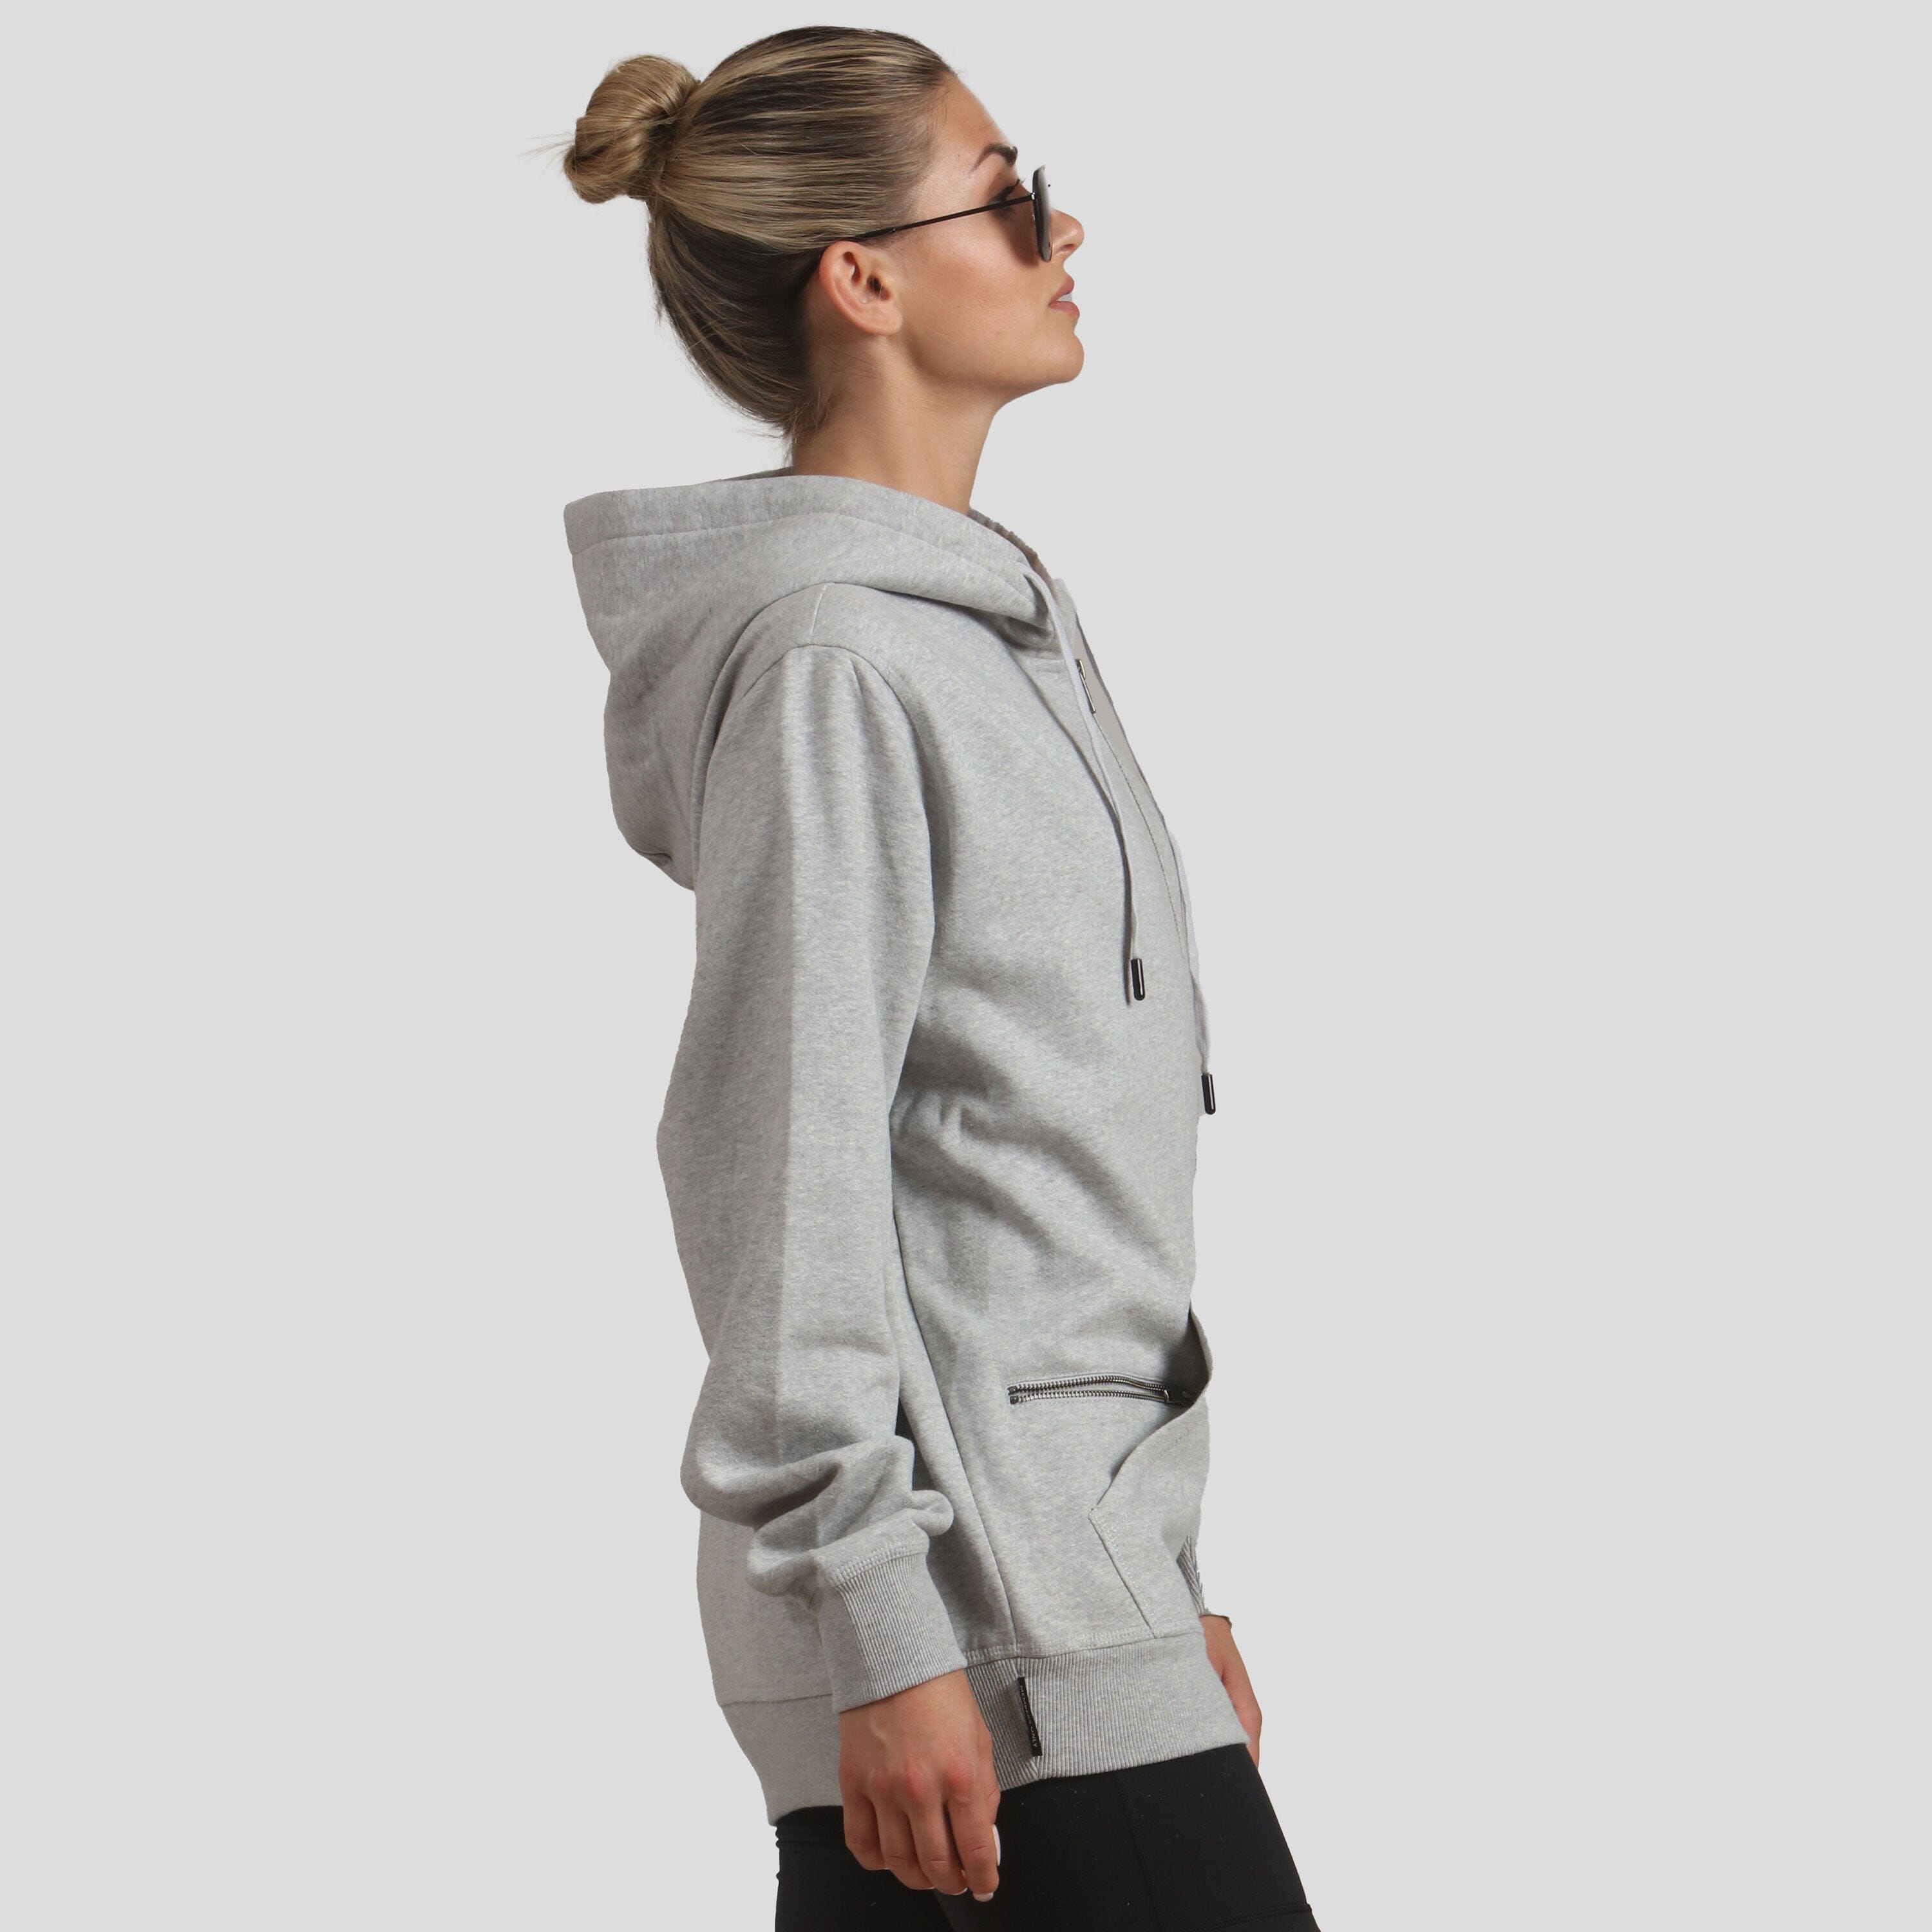 Women's Hoodies & Sweatshirts, Oversized Sweatshirts & Zip Ups